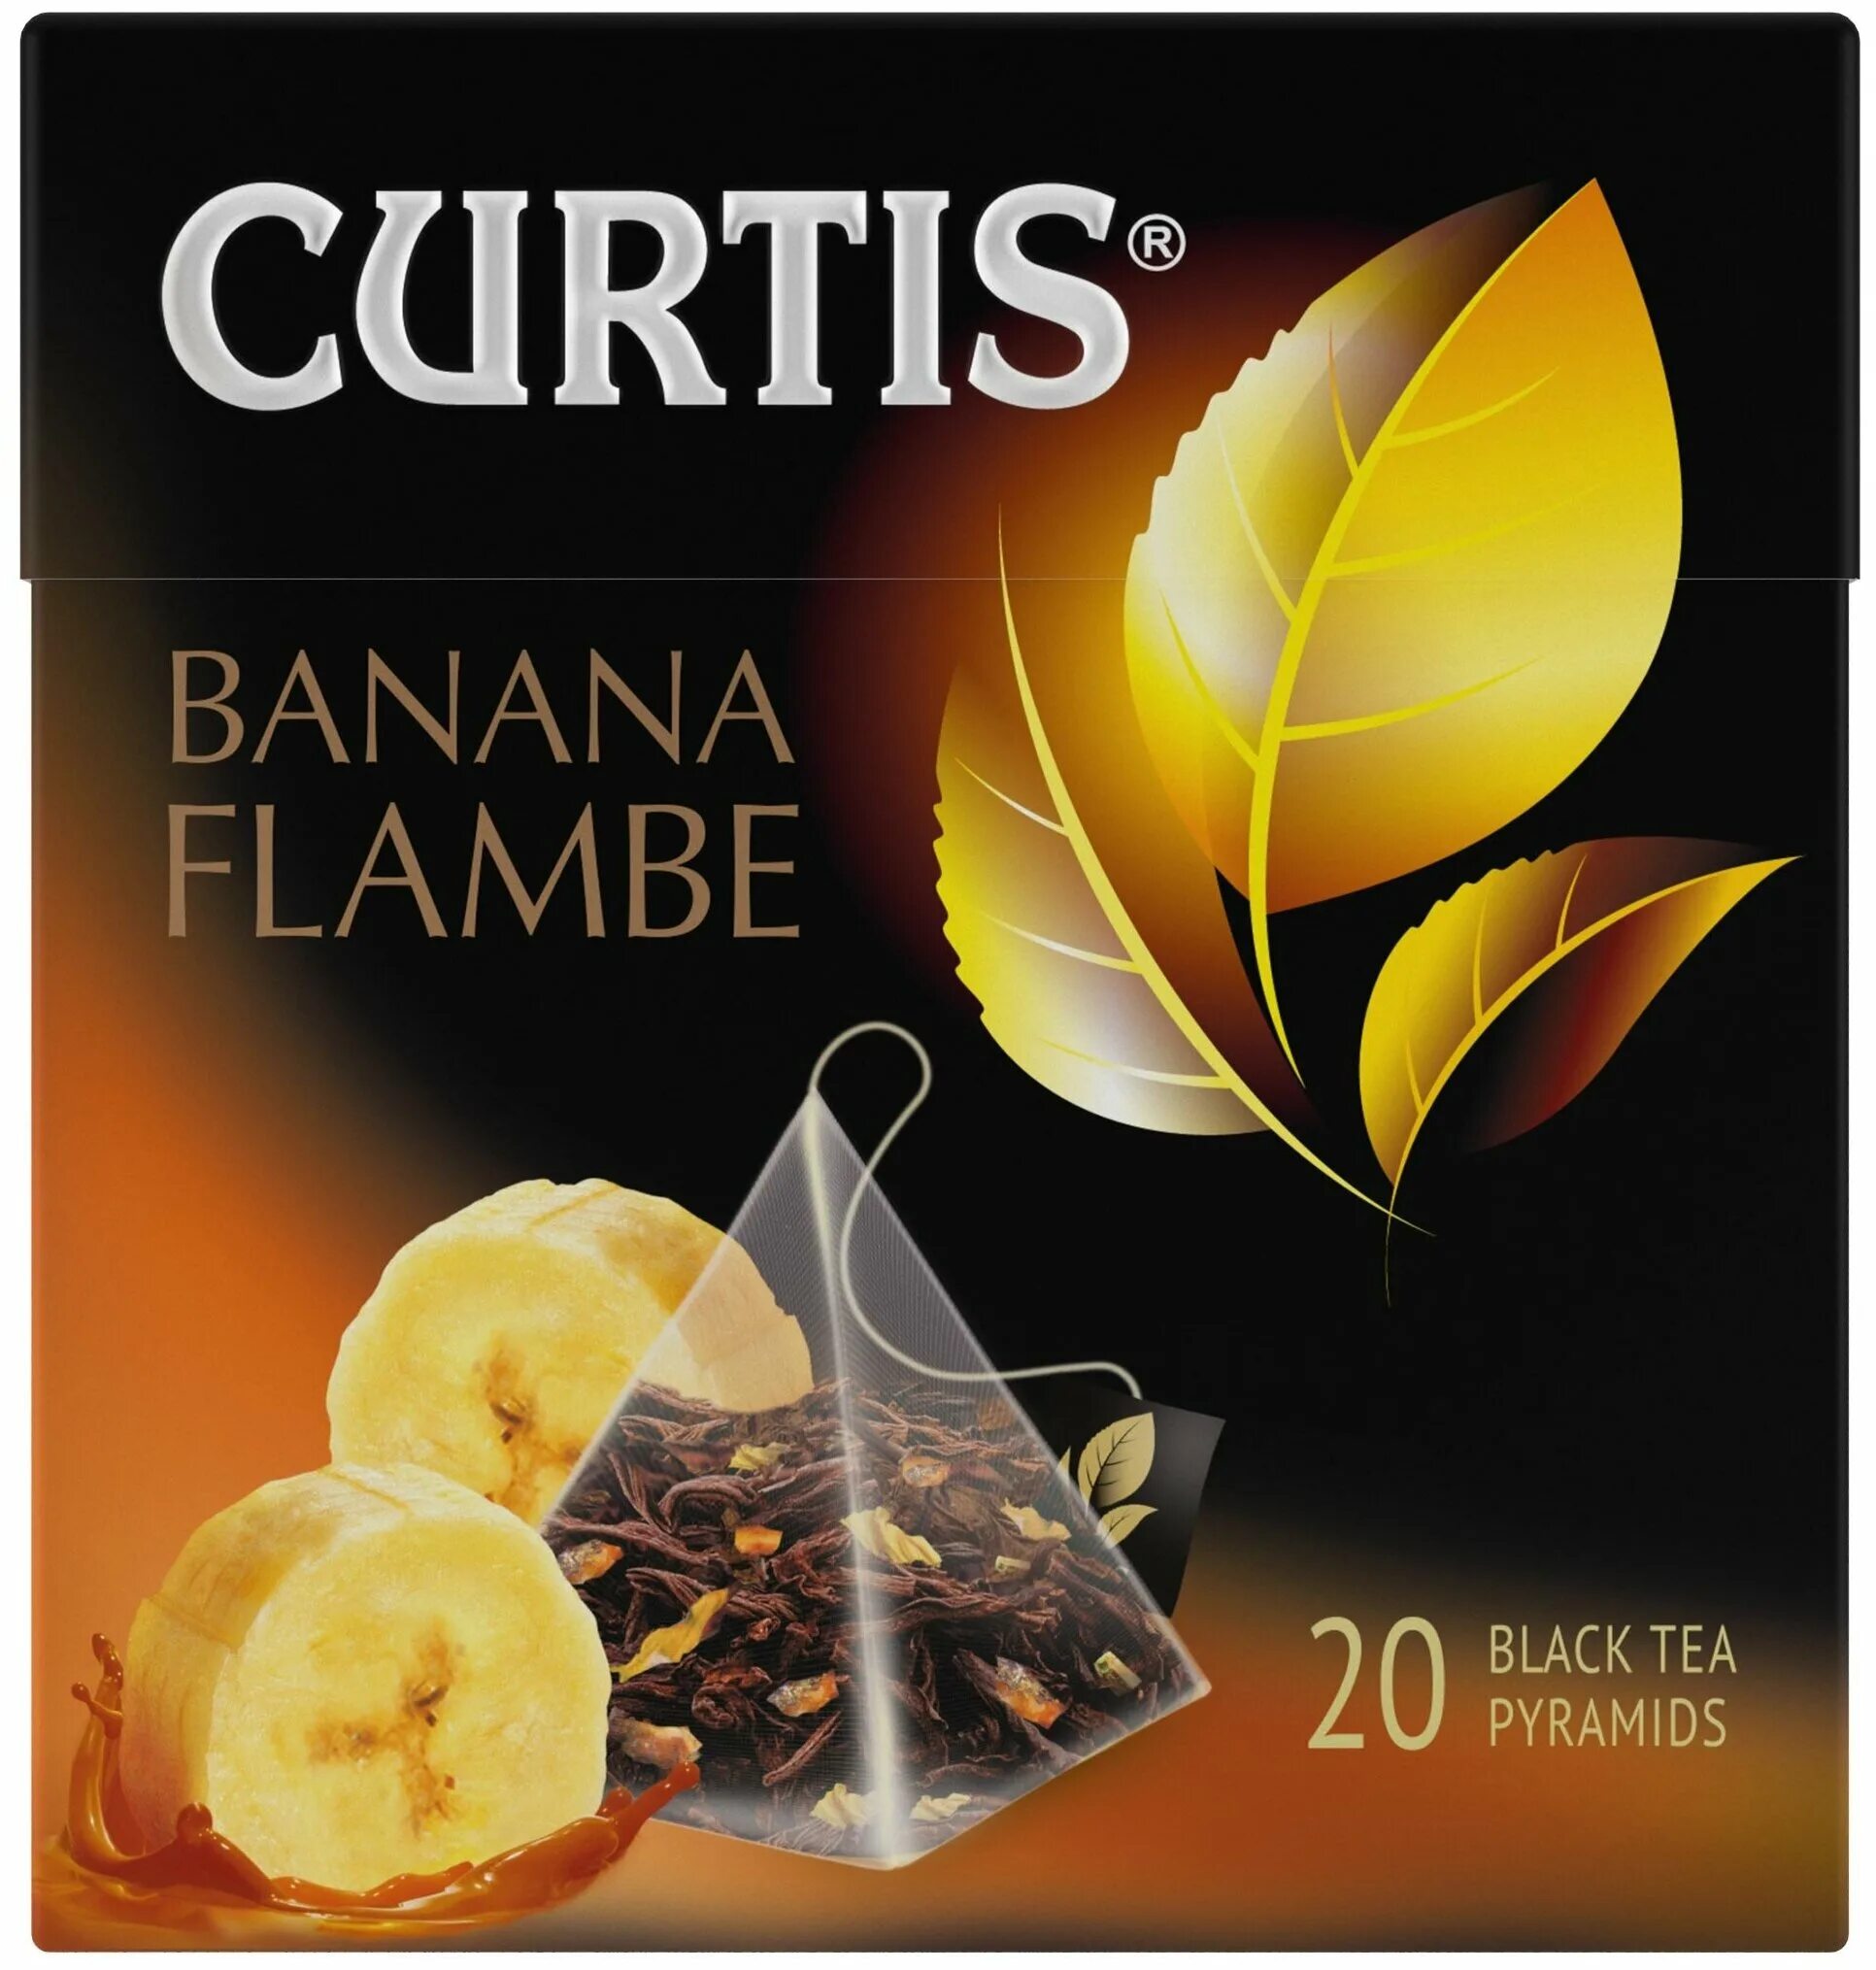 Чай curtis купить. Кёртис банана фламбе. Банановый чай Curtis. Чай Кертис с бананом. Черный чай Кертис манго.